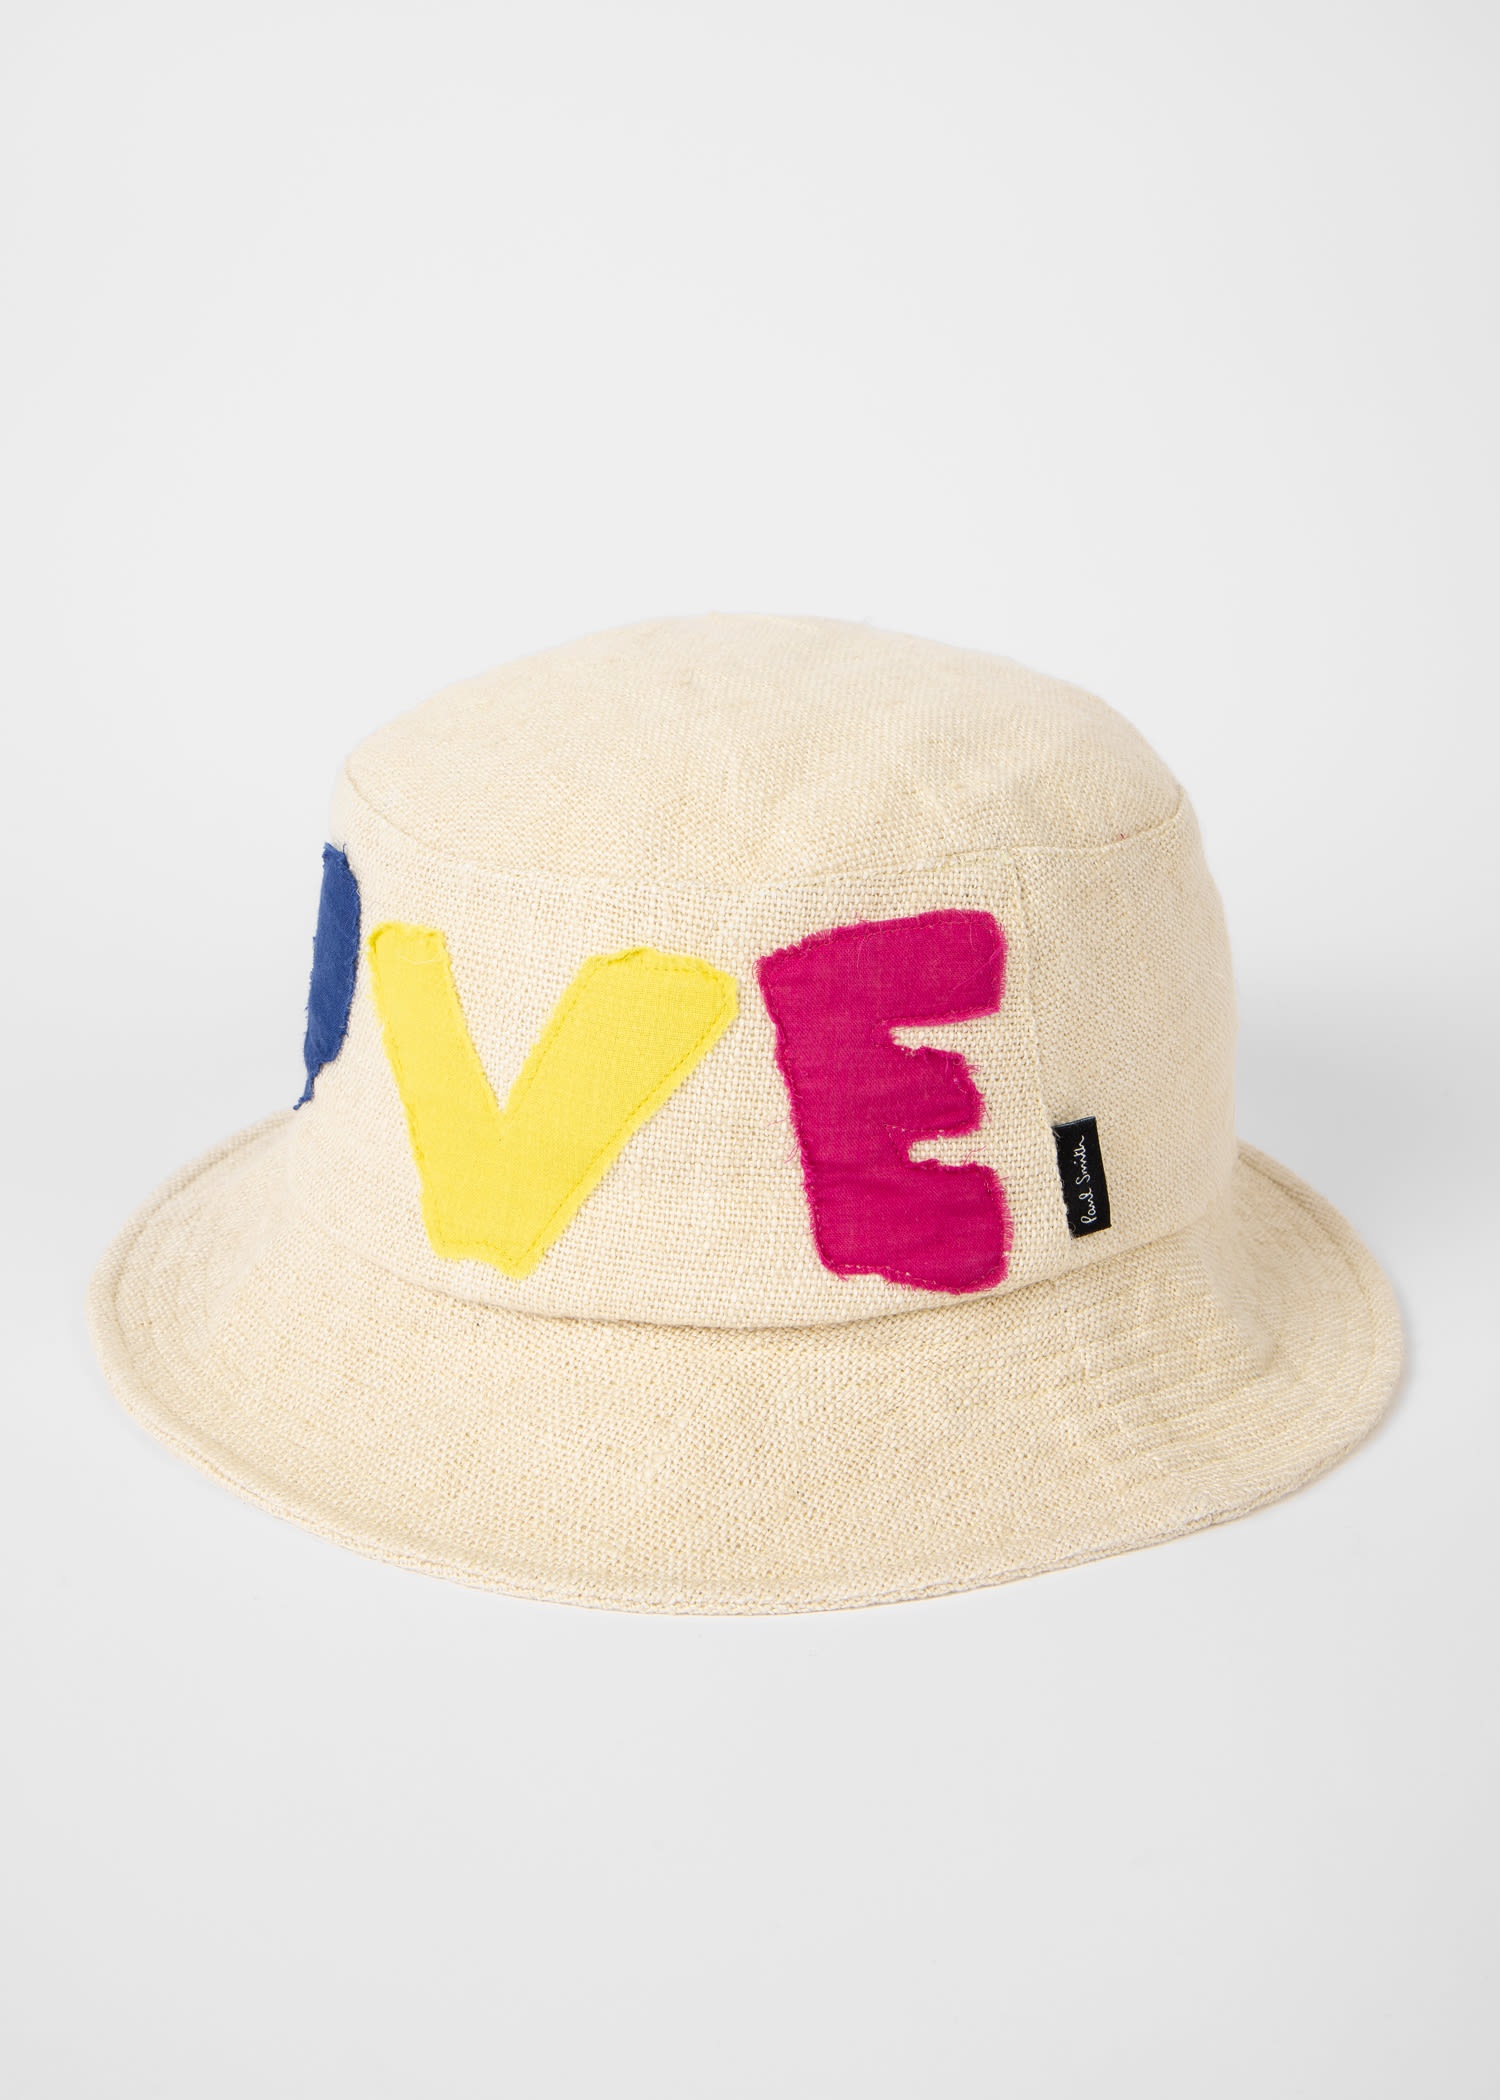 'Love' Bucket Hat - 2